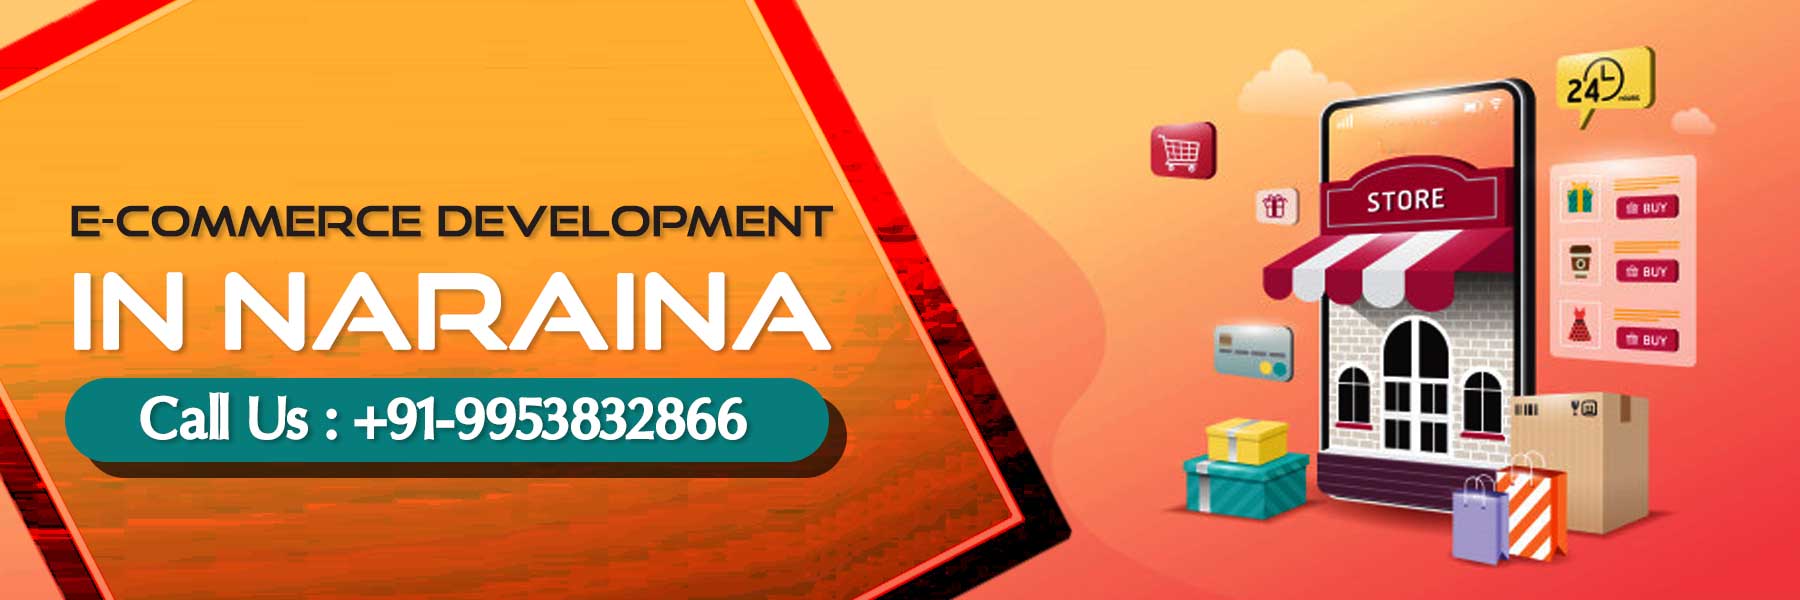 ecommerce development in Naraina